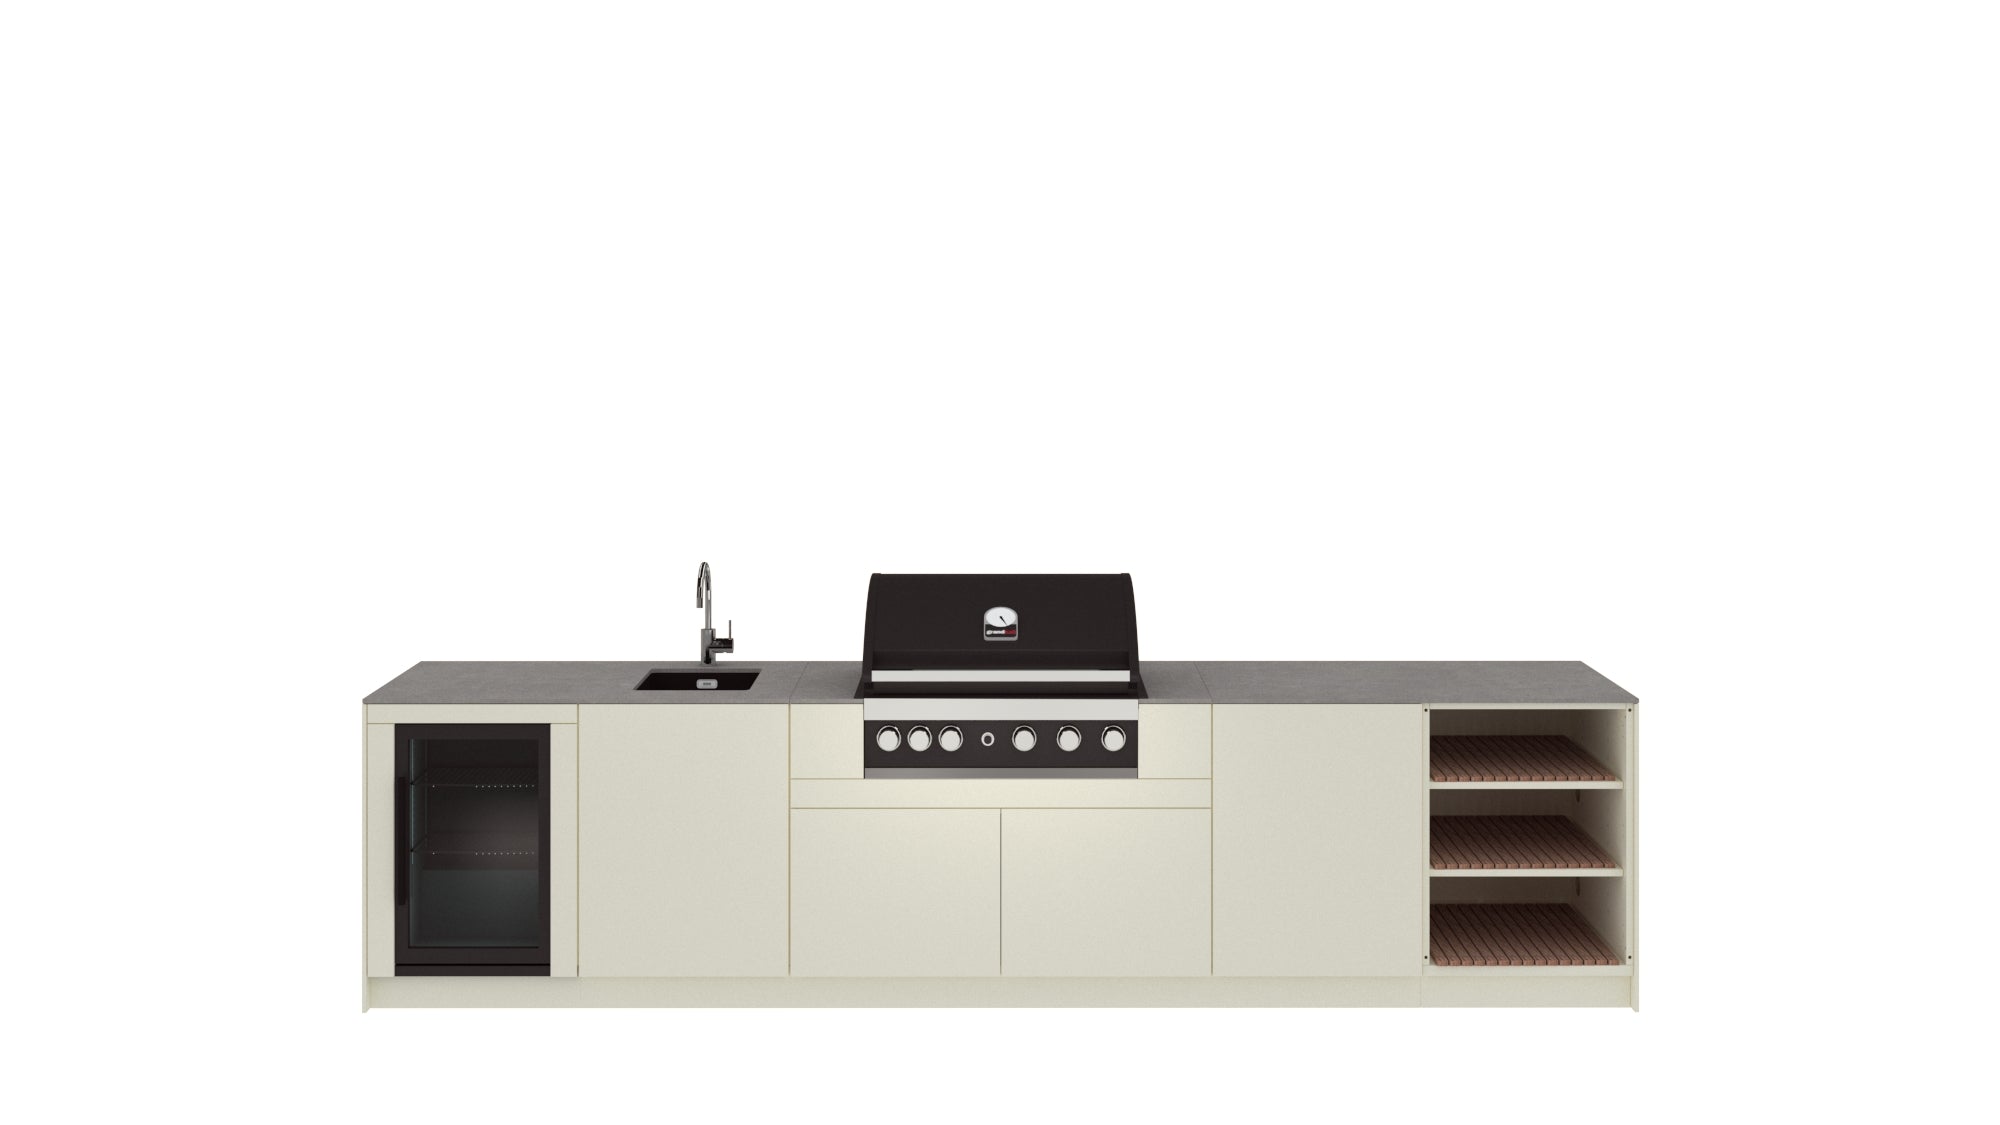 Kitchen Boxy - Outdoor Kitchen KB360 Variant 1 (3D Configurator)